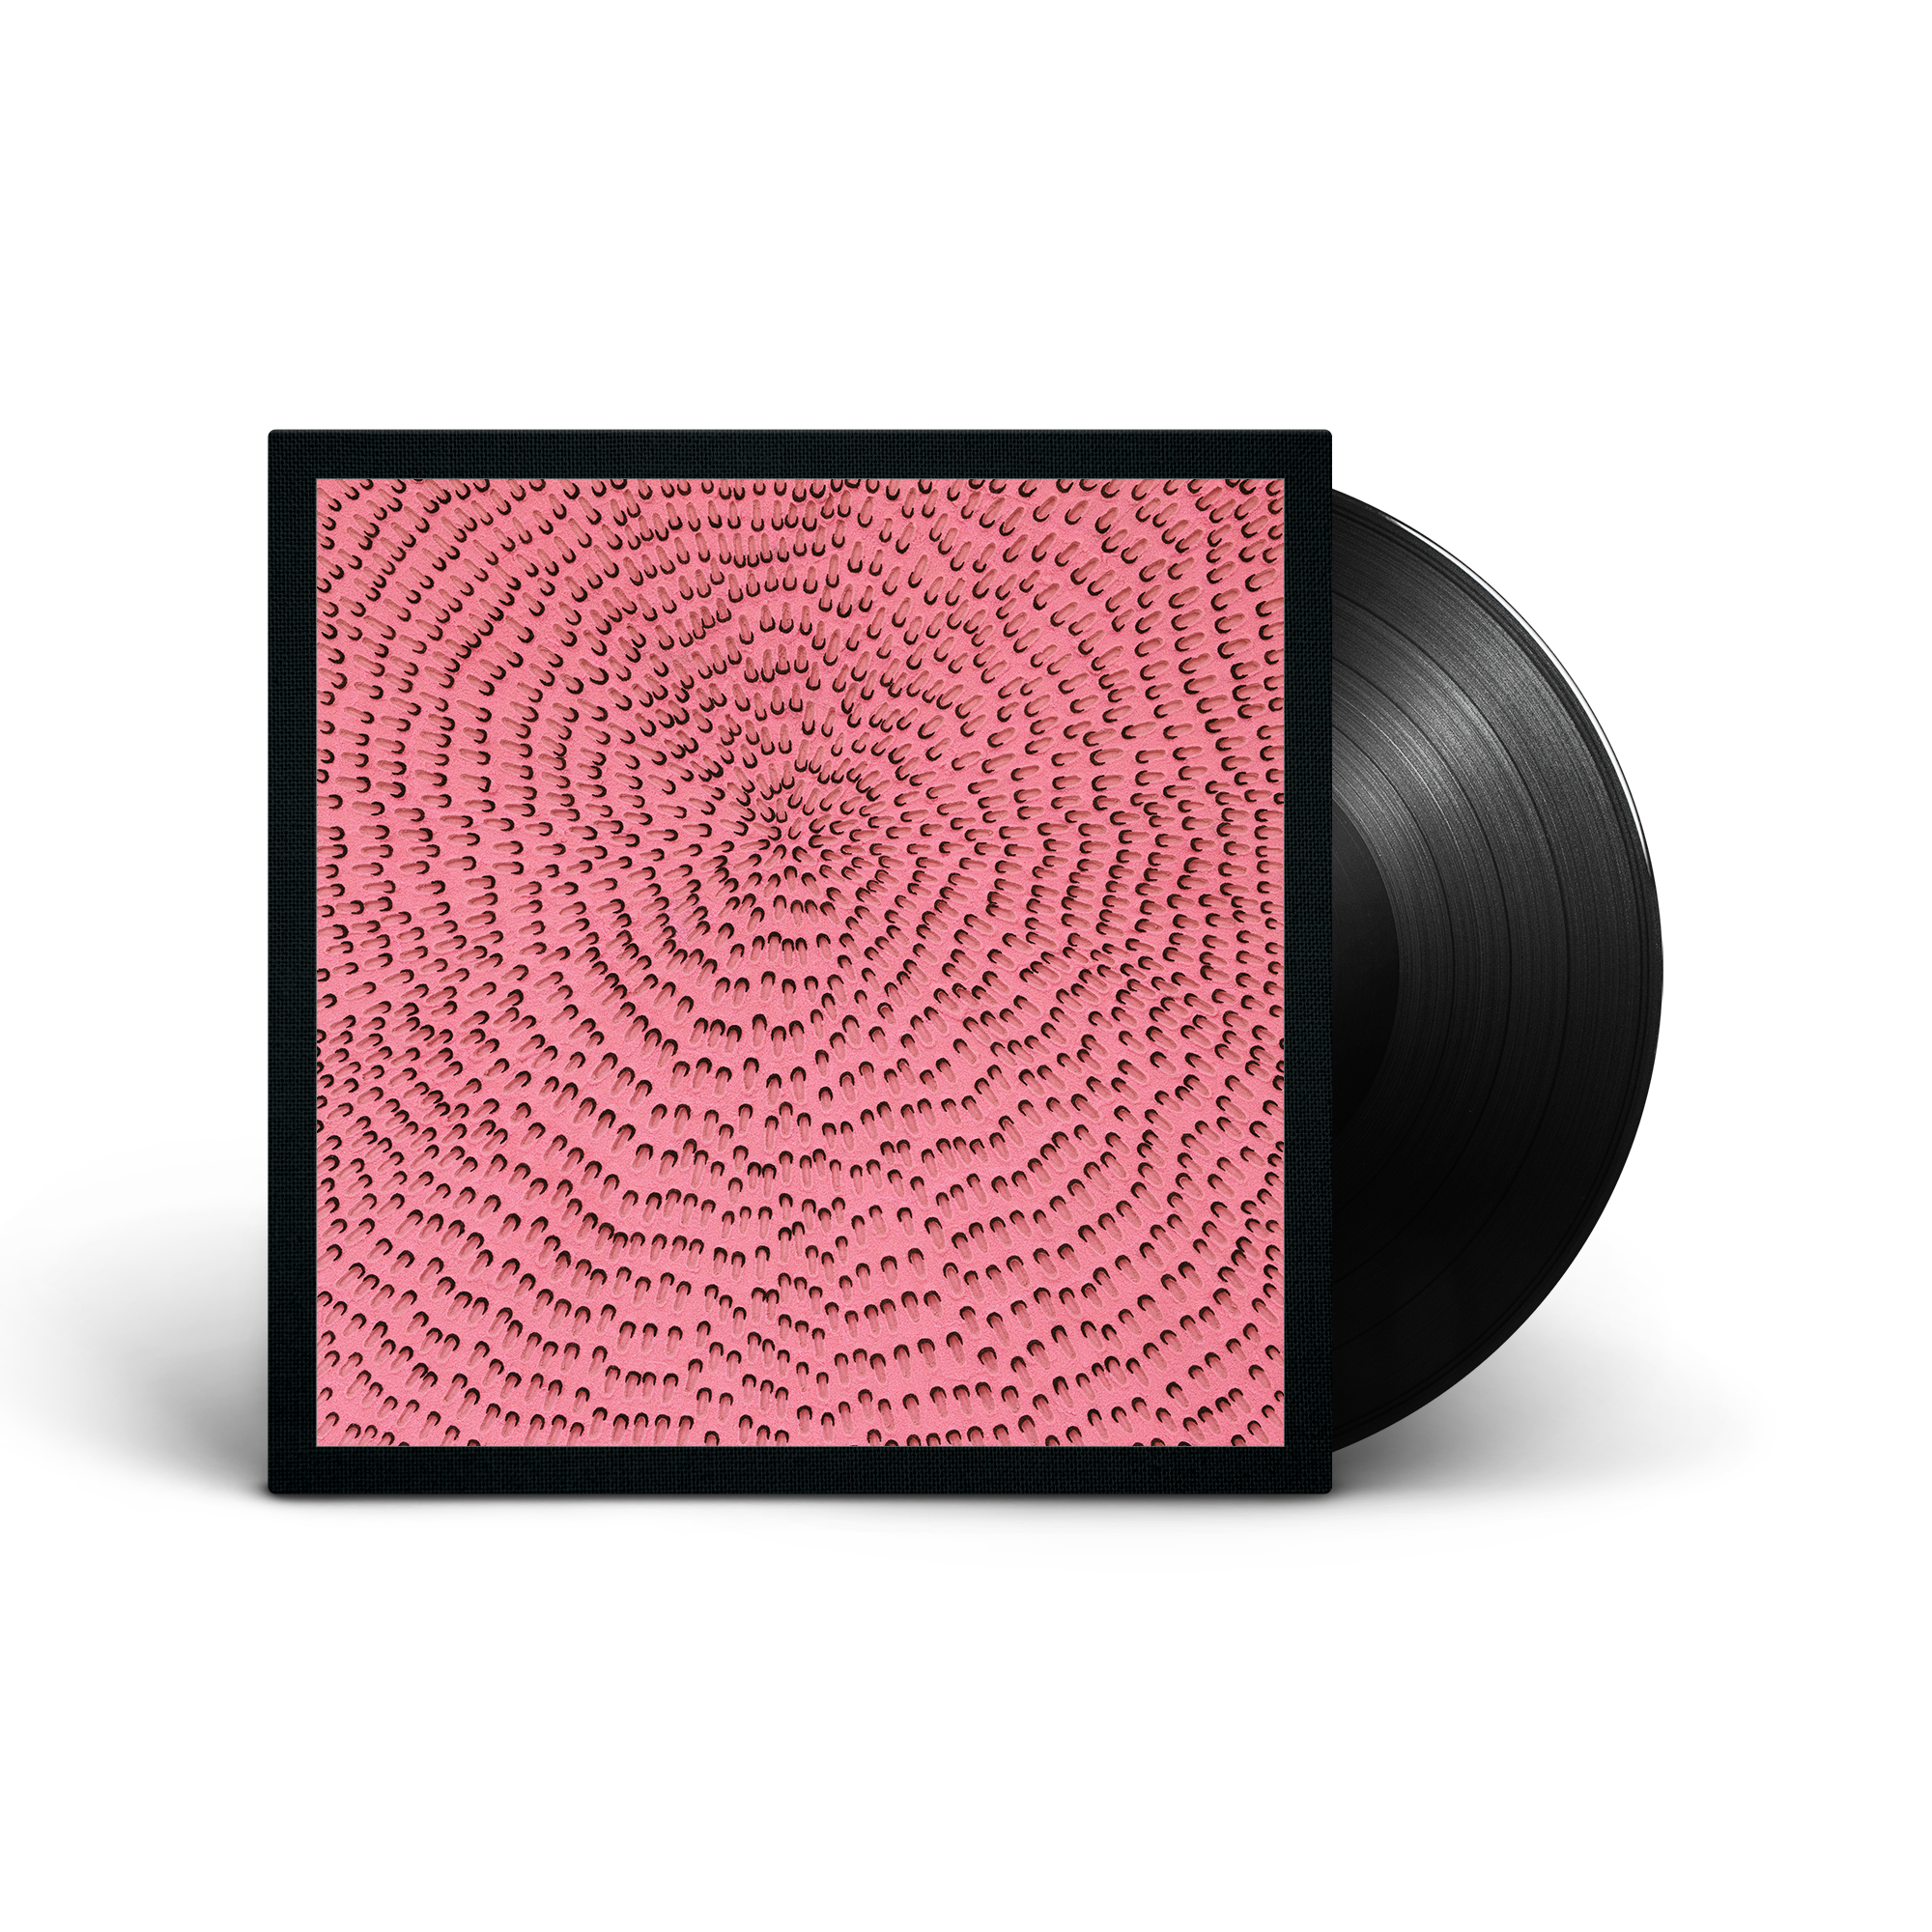 Unboxing Blackpink Limited Edition Born Pink Vinyl LP / Quick Look 